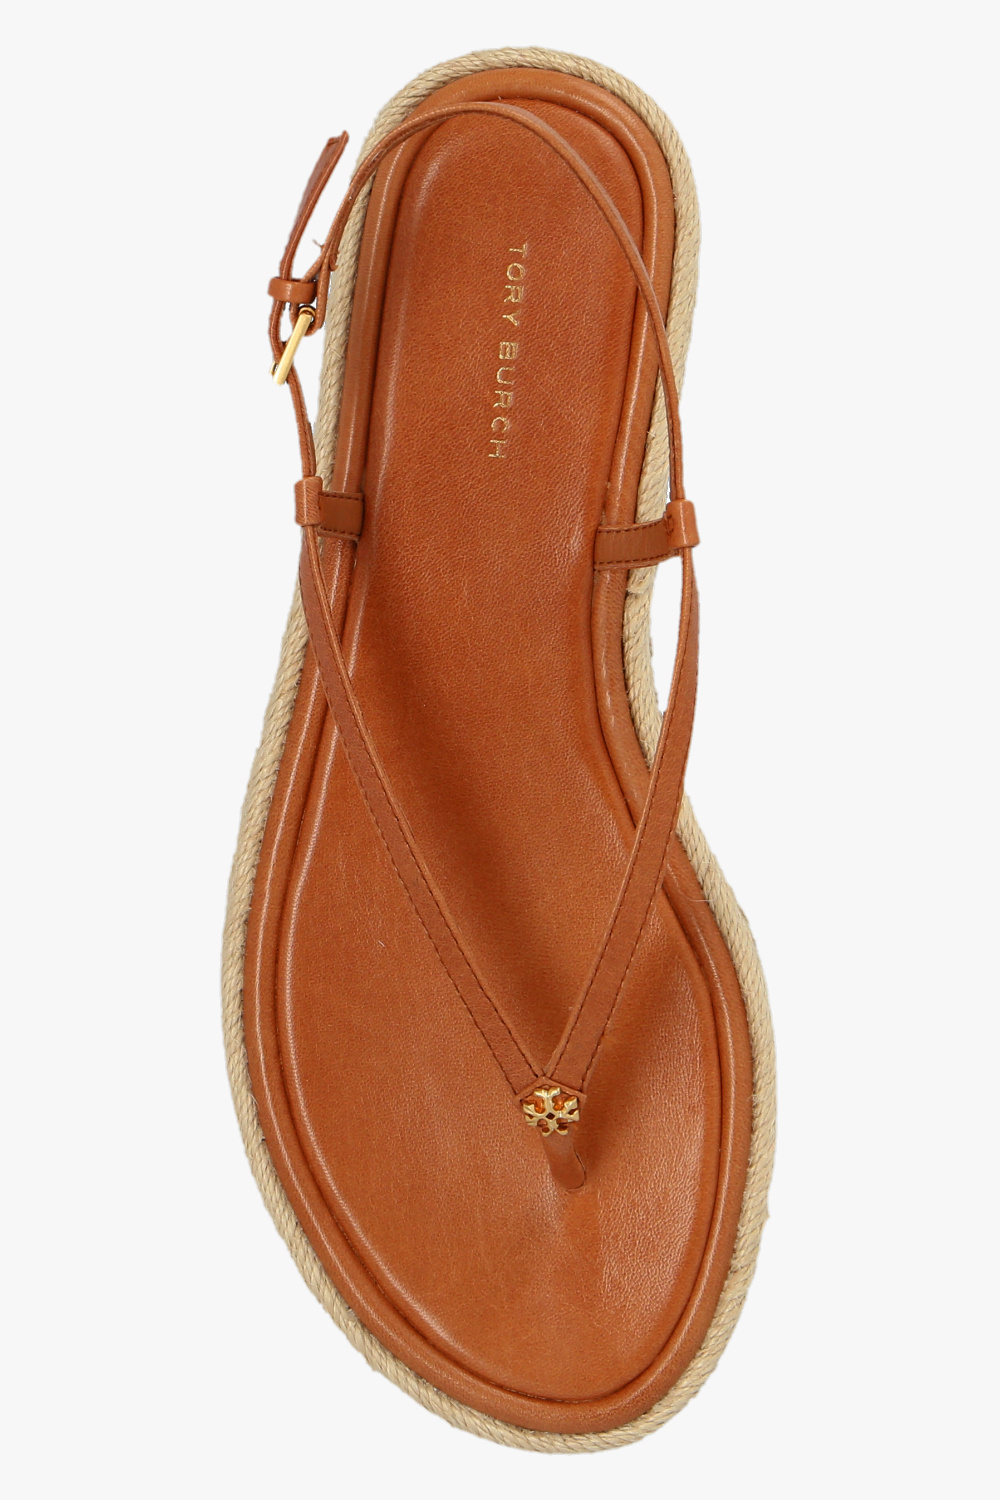 Tory Burch Leather sandals | Women's Shoes | Vitkac